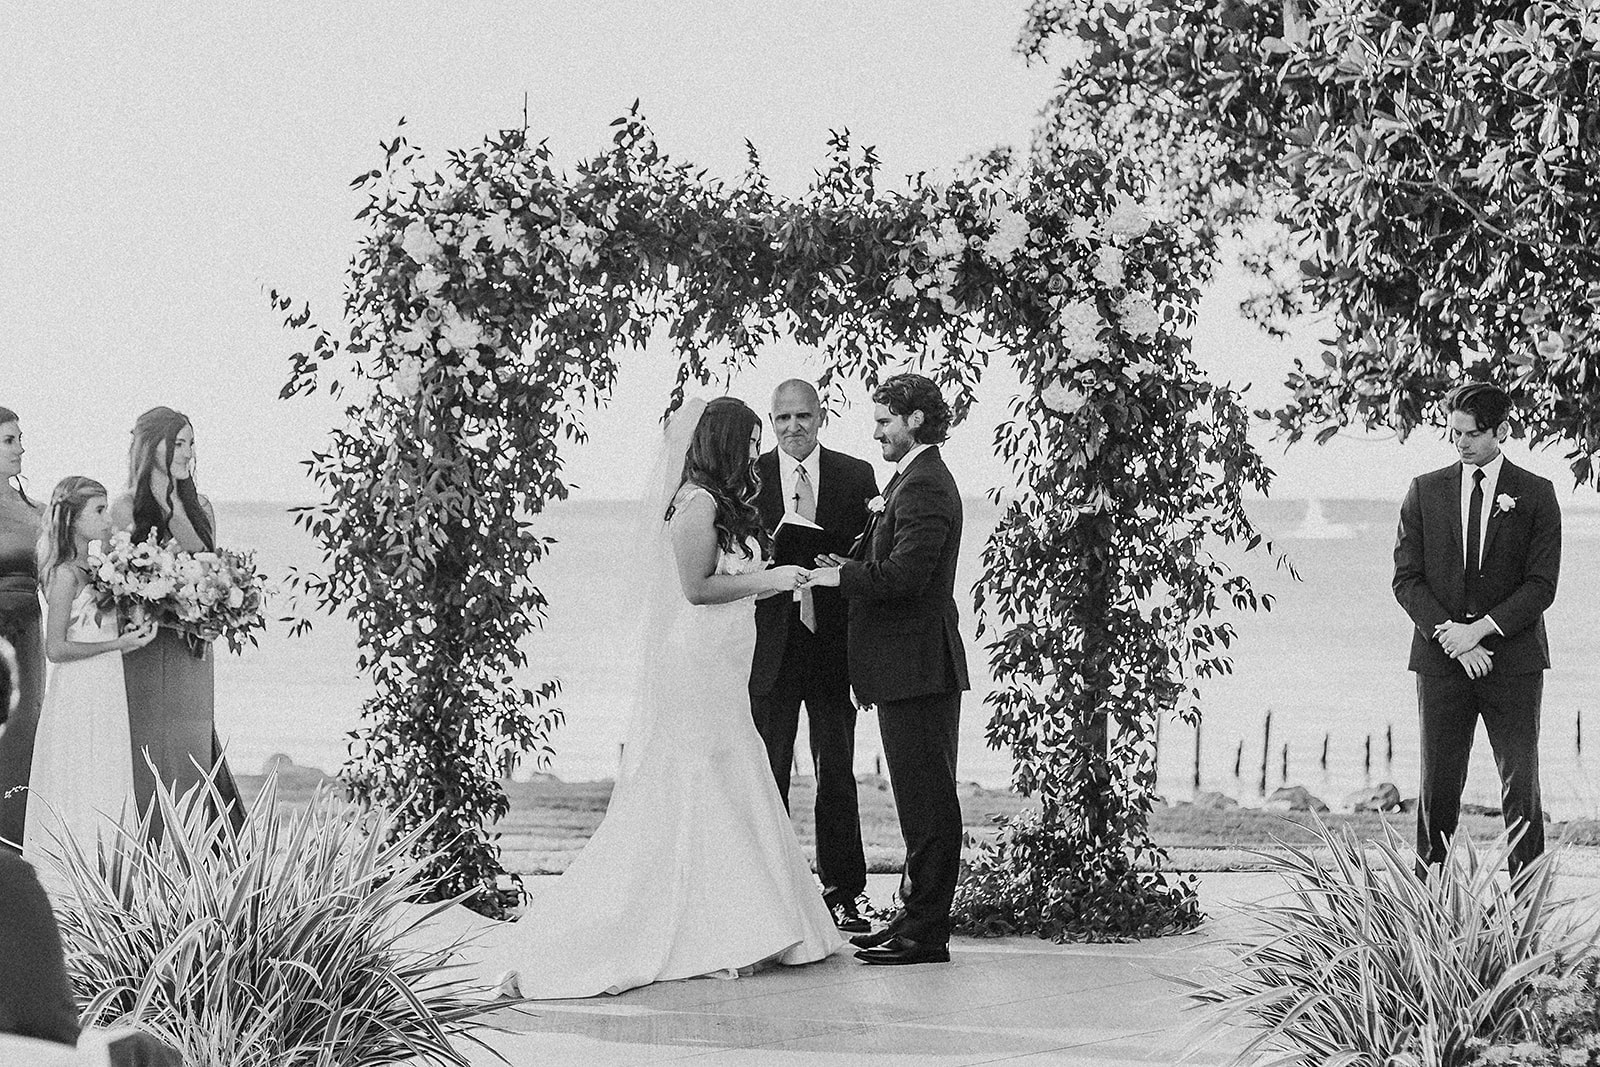 Christina and Jordan's wedding at the Coastal Arts Center of Orange Beach